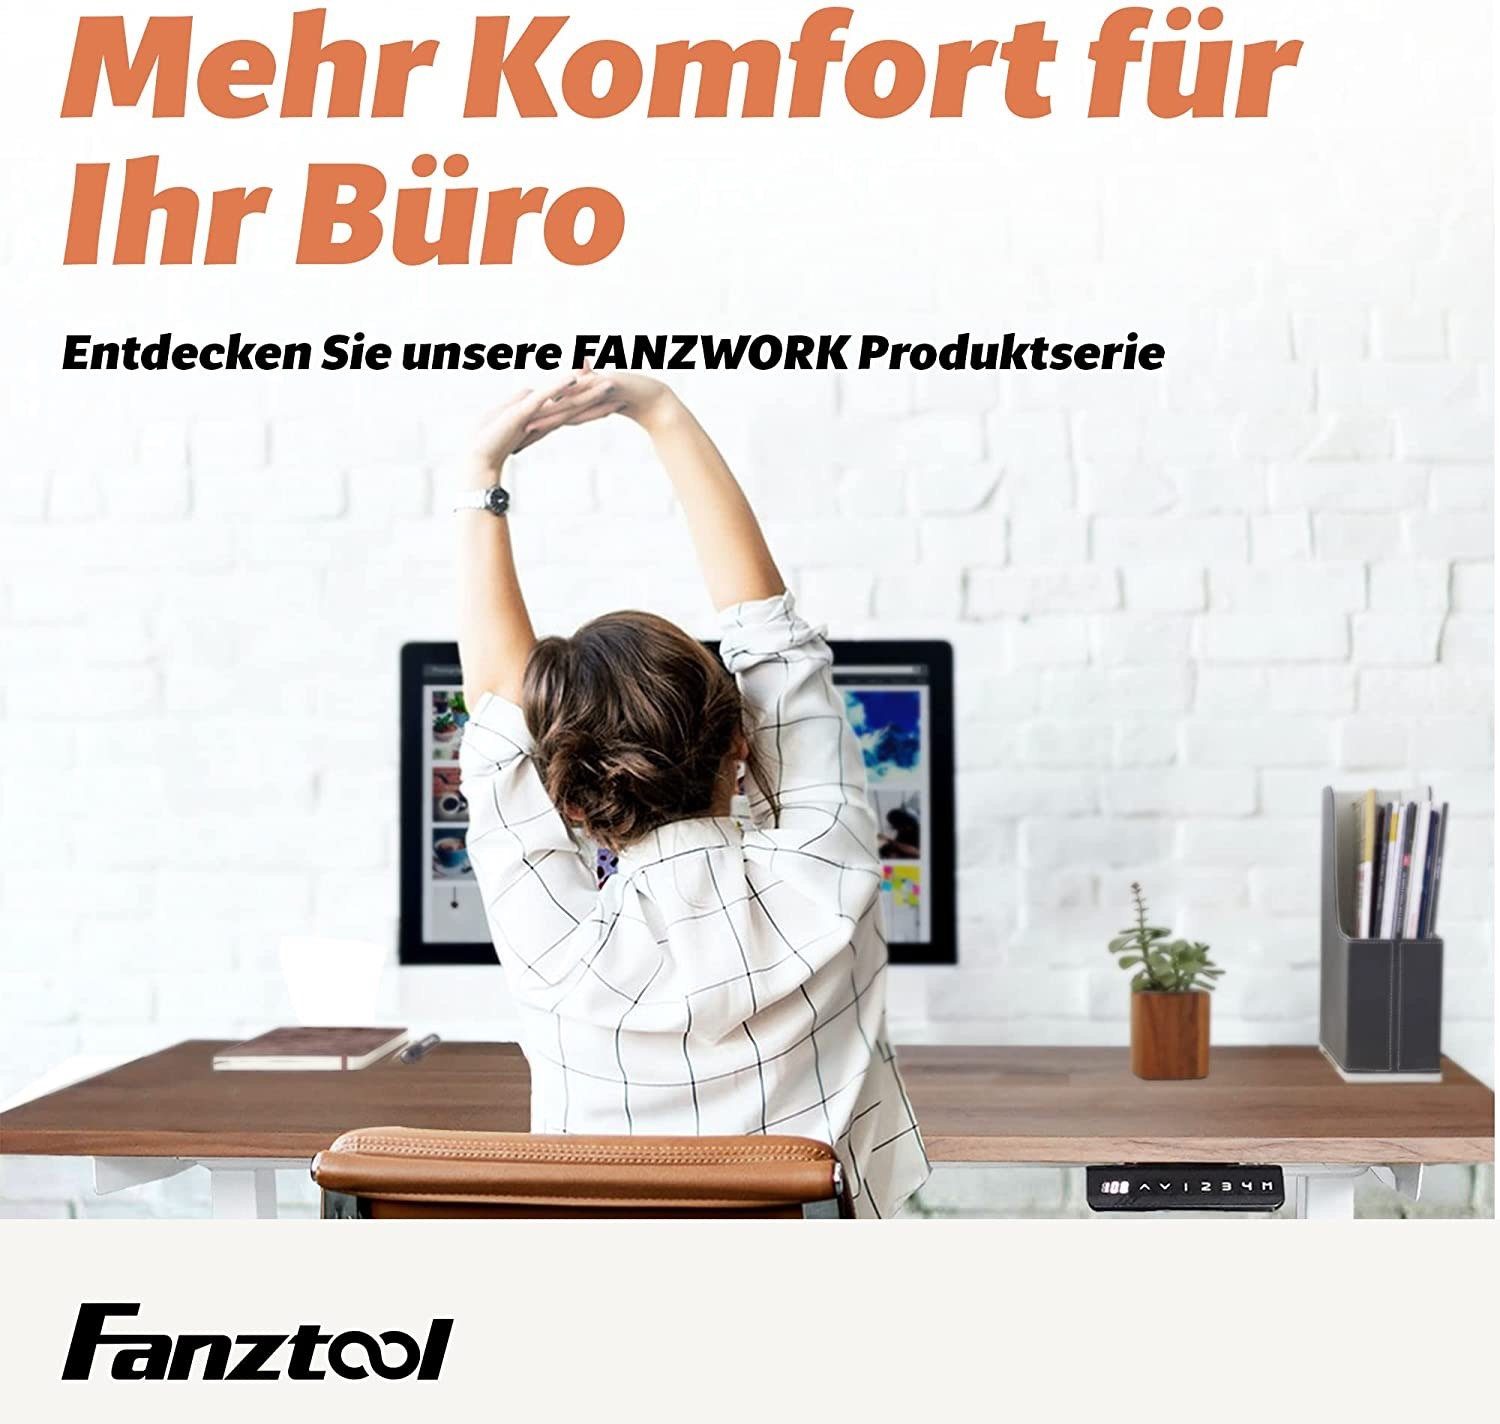 Schwarz Fanztool Tischplatte FANZTOOL Tischplatte